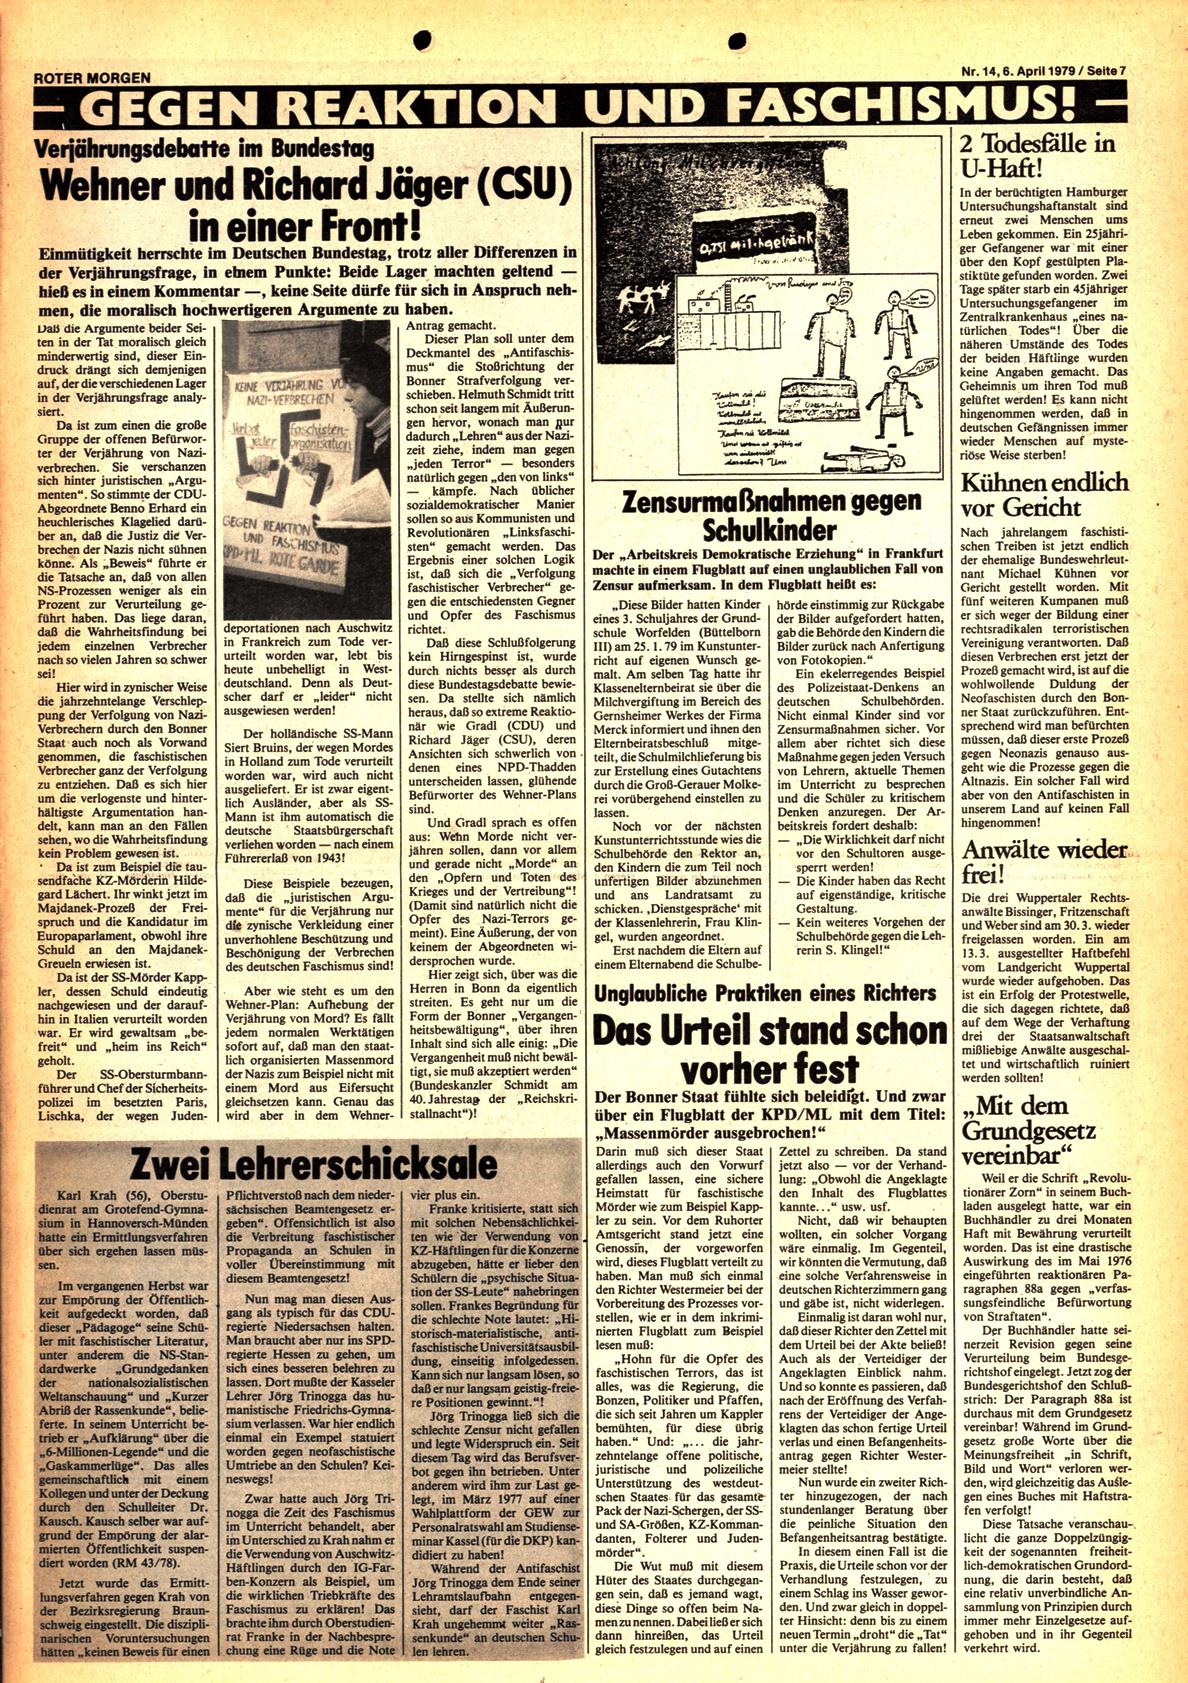 Roter Morgen, 13. Jg., 6. April 1979, Nr. 14, Seite 7